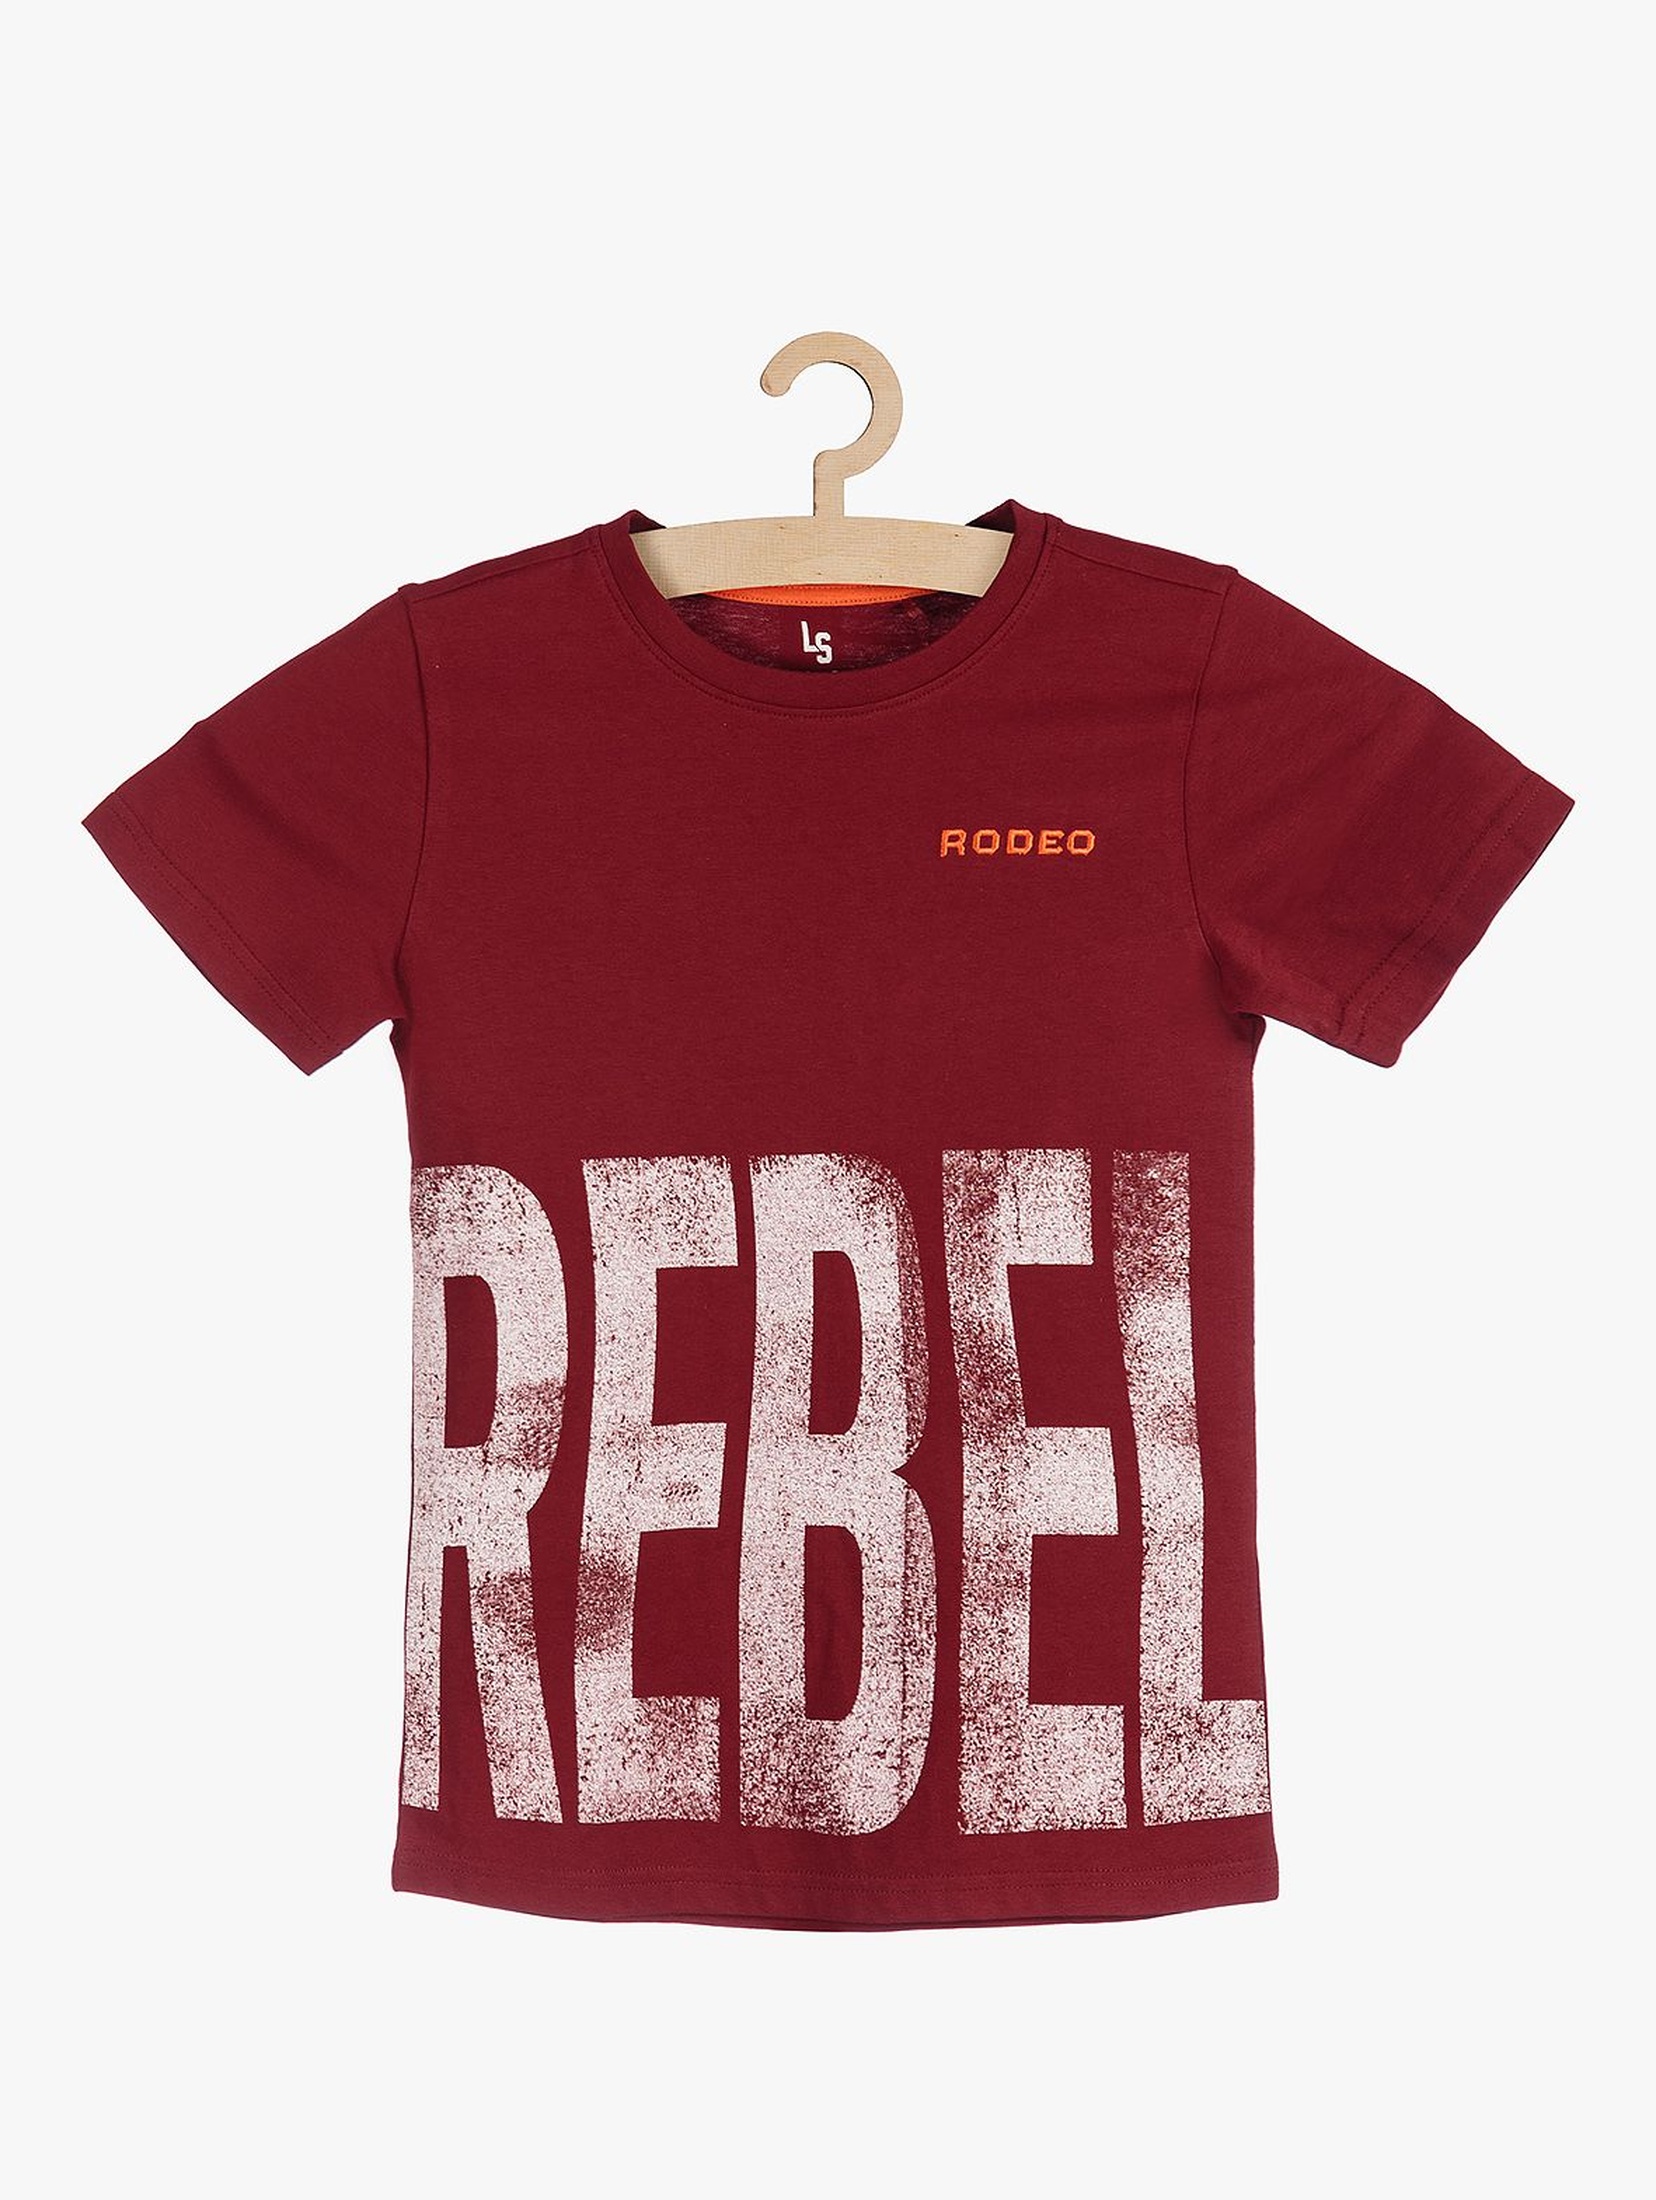 Koszulka dzianinowa z napisem Rebel